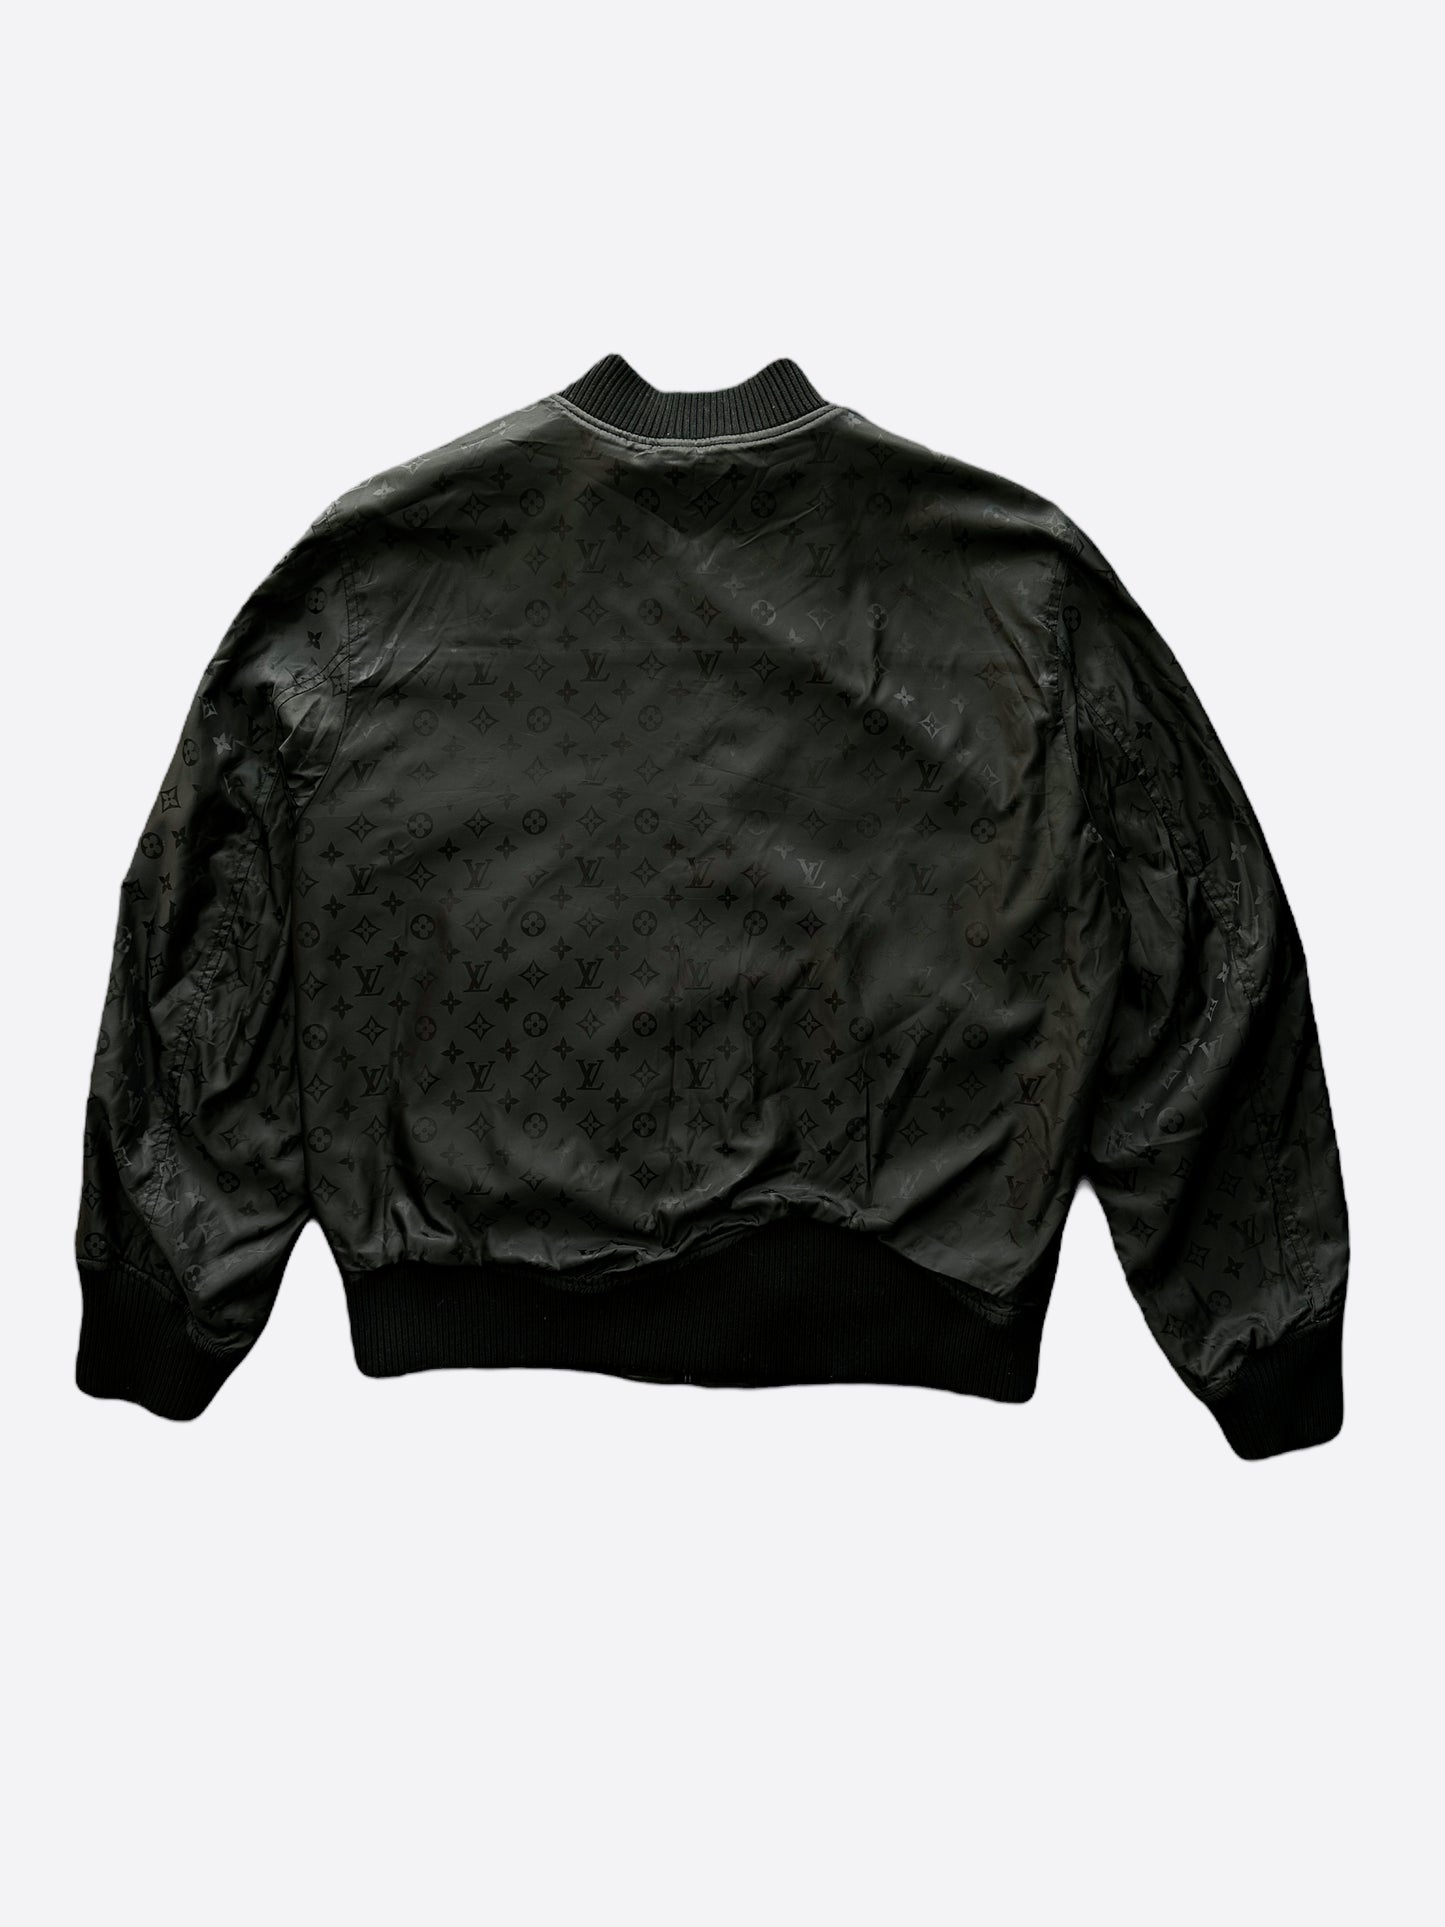 Louis Vuitton Reversible Leather Nylon Jacket BLACK. Size 44